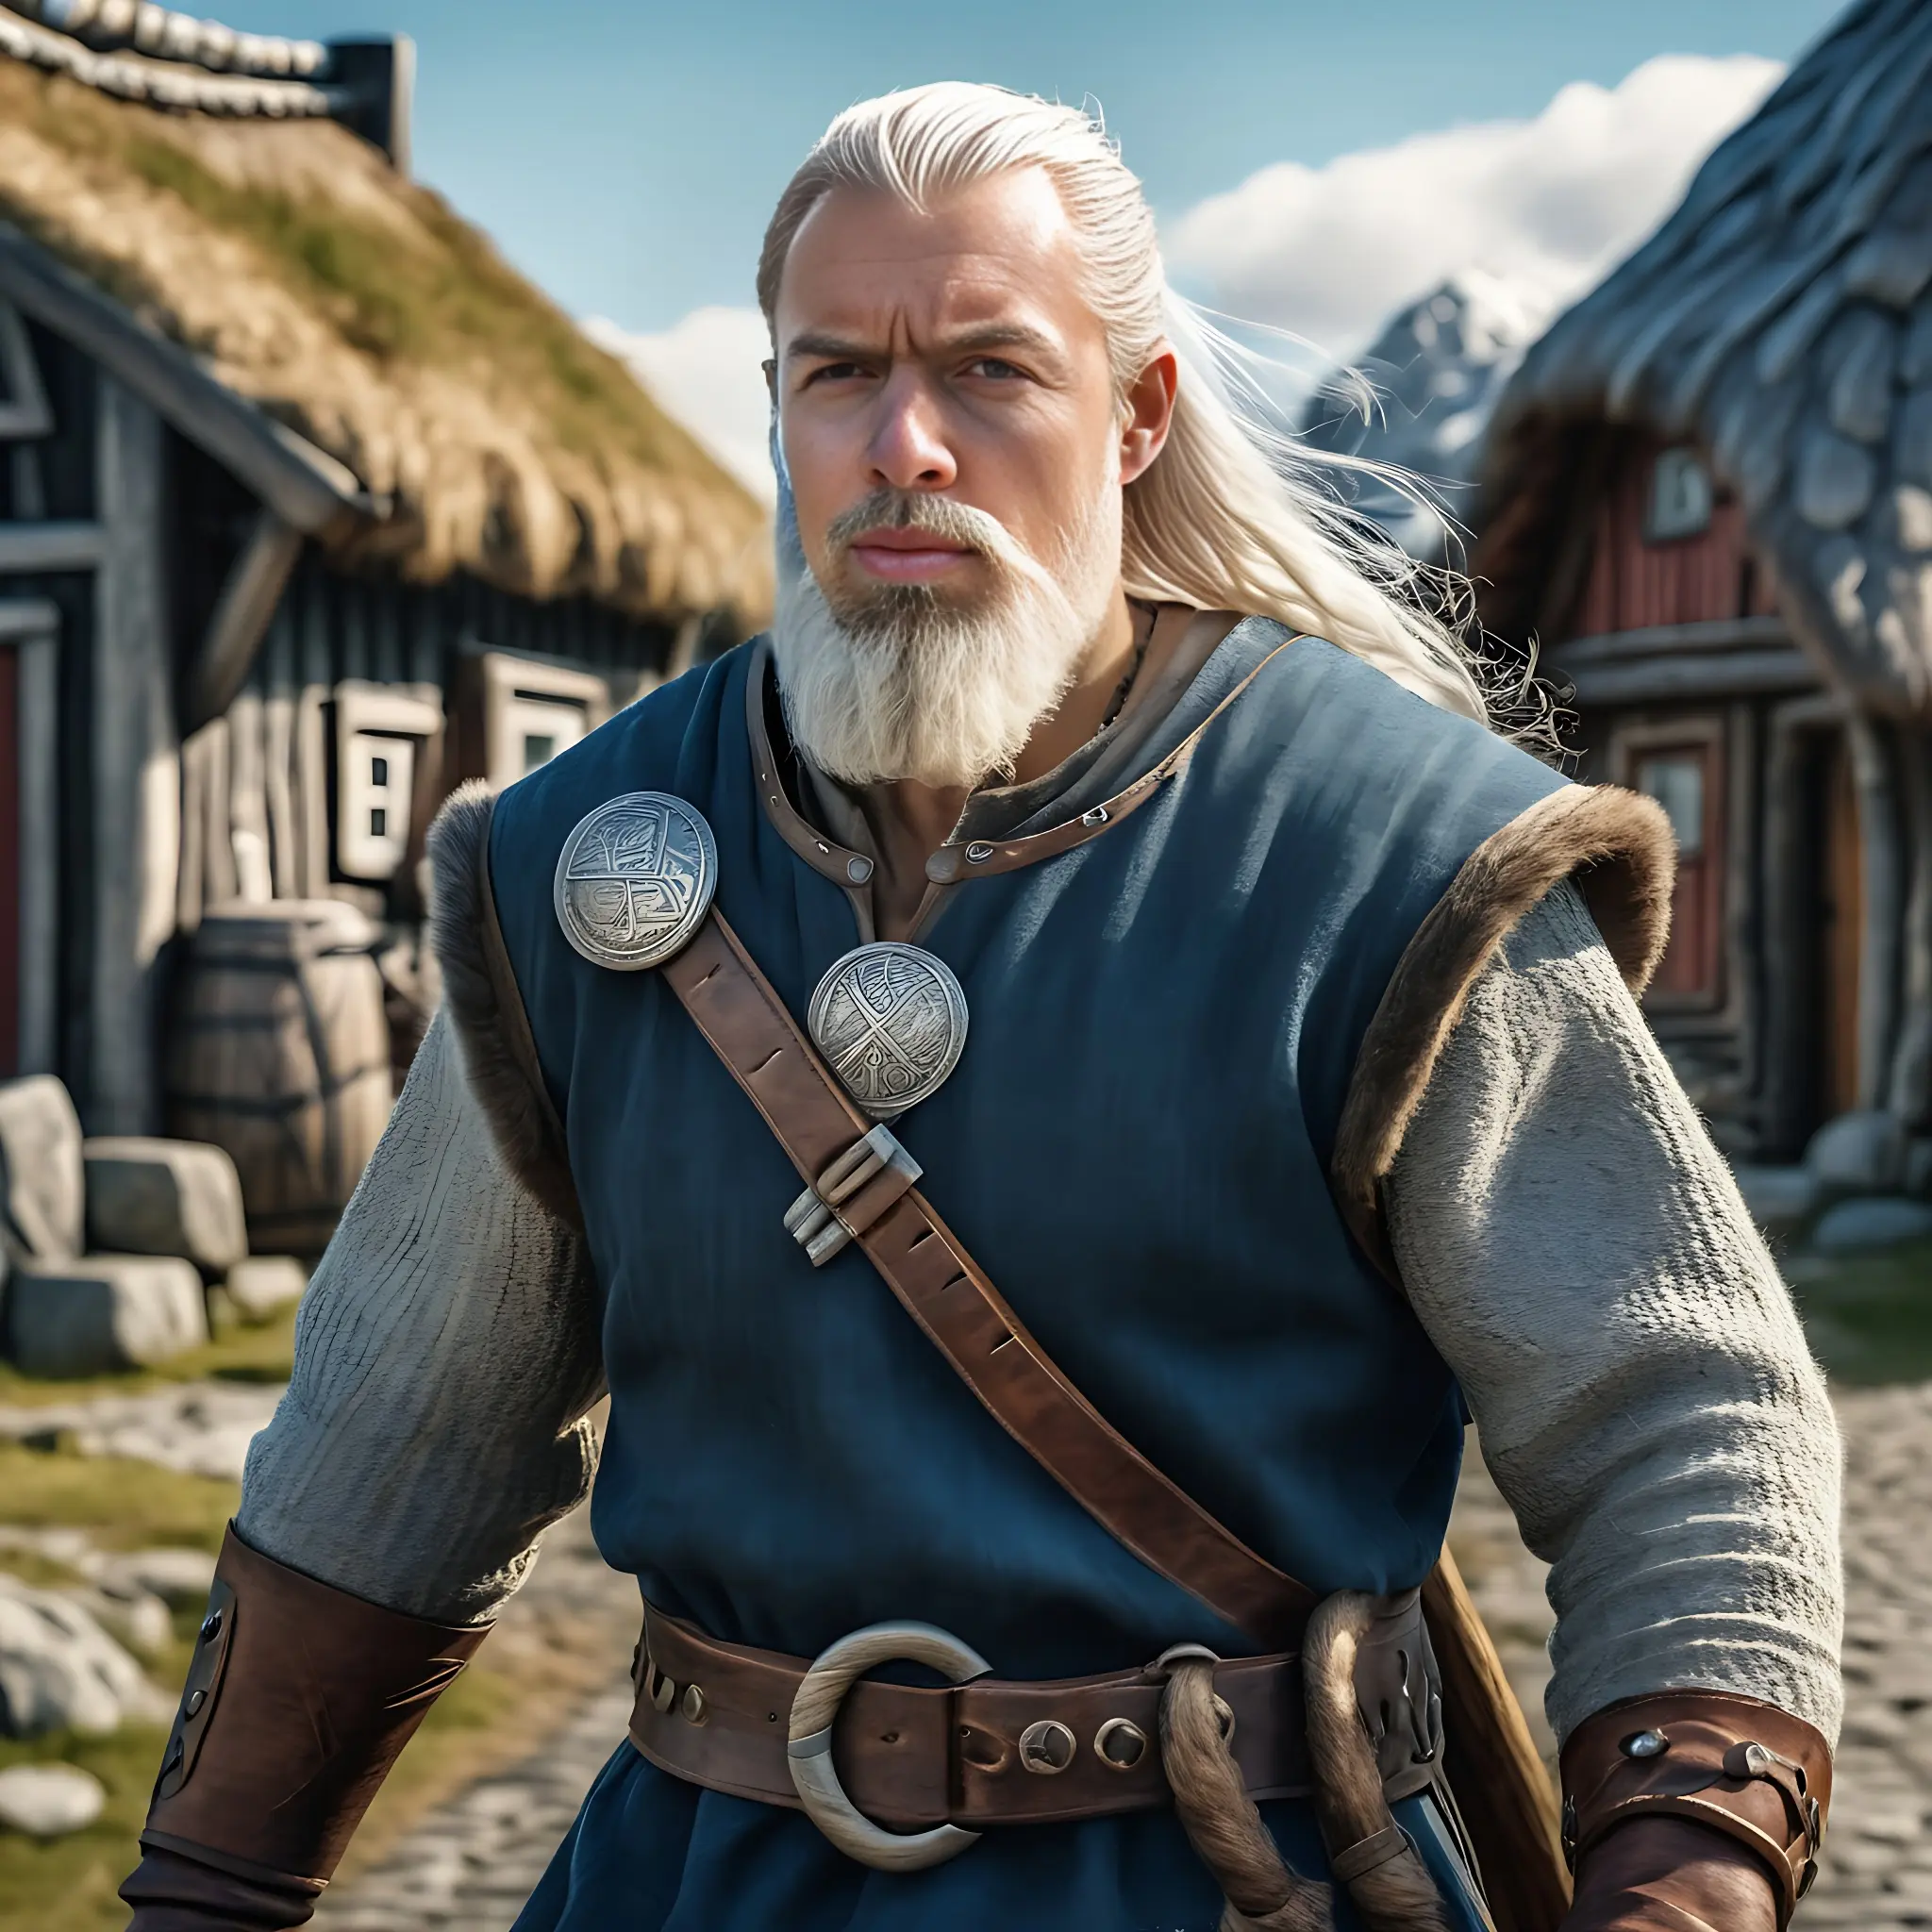 what would i look like as a viking - Blog - VikingPic